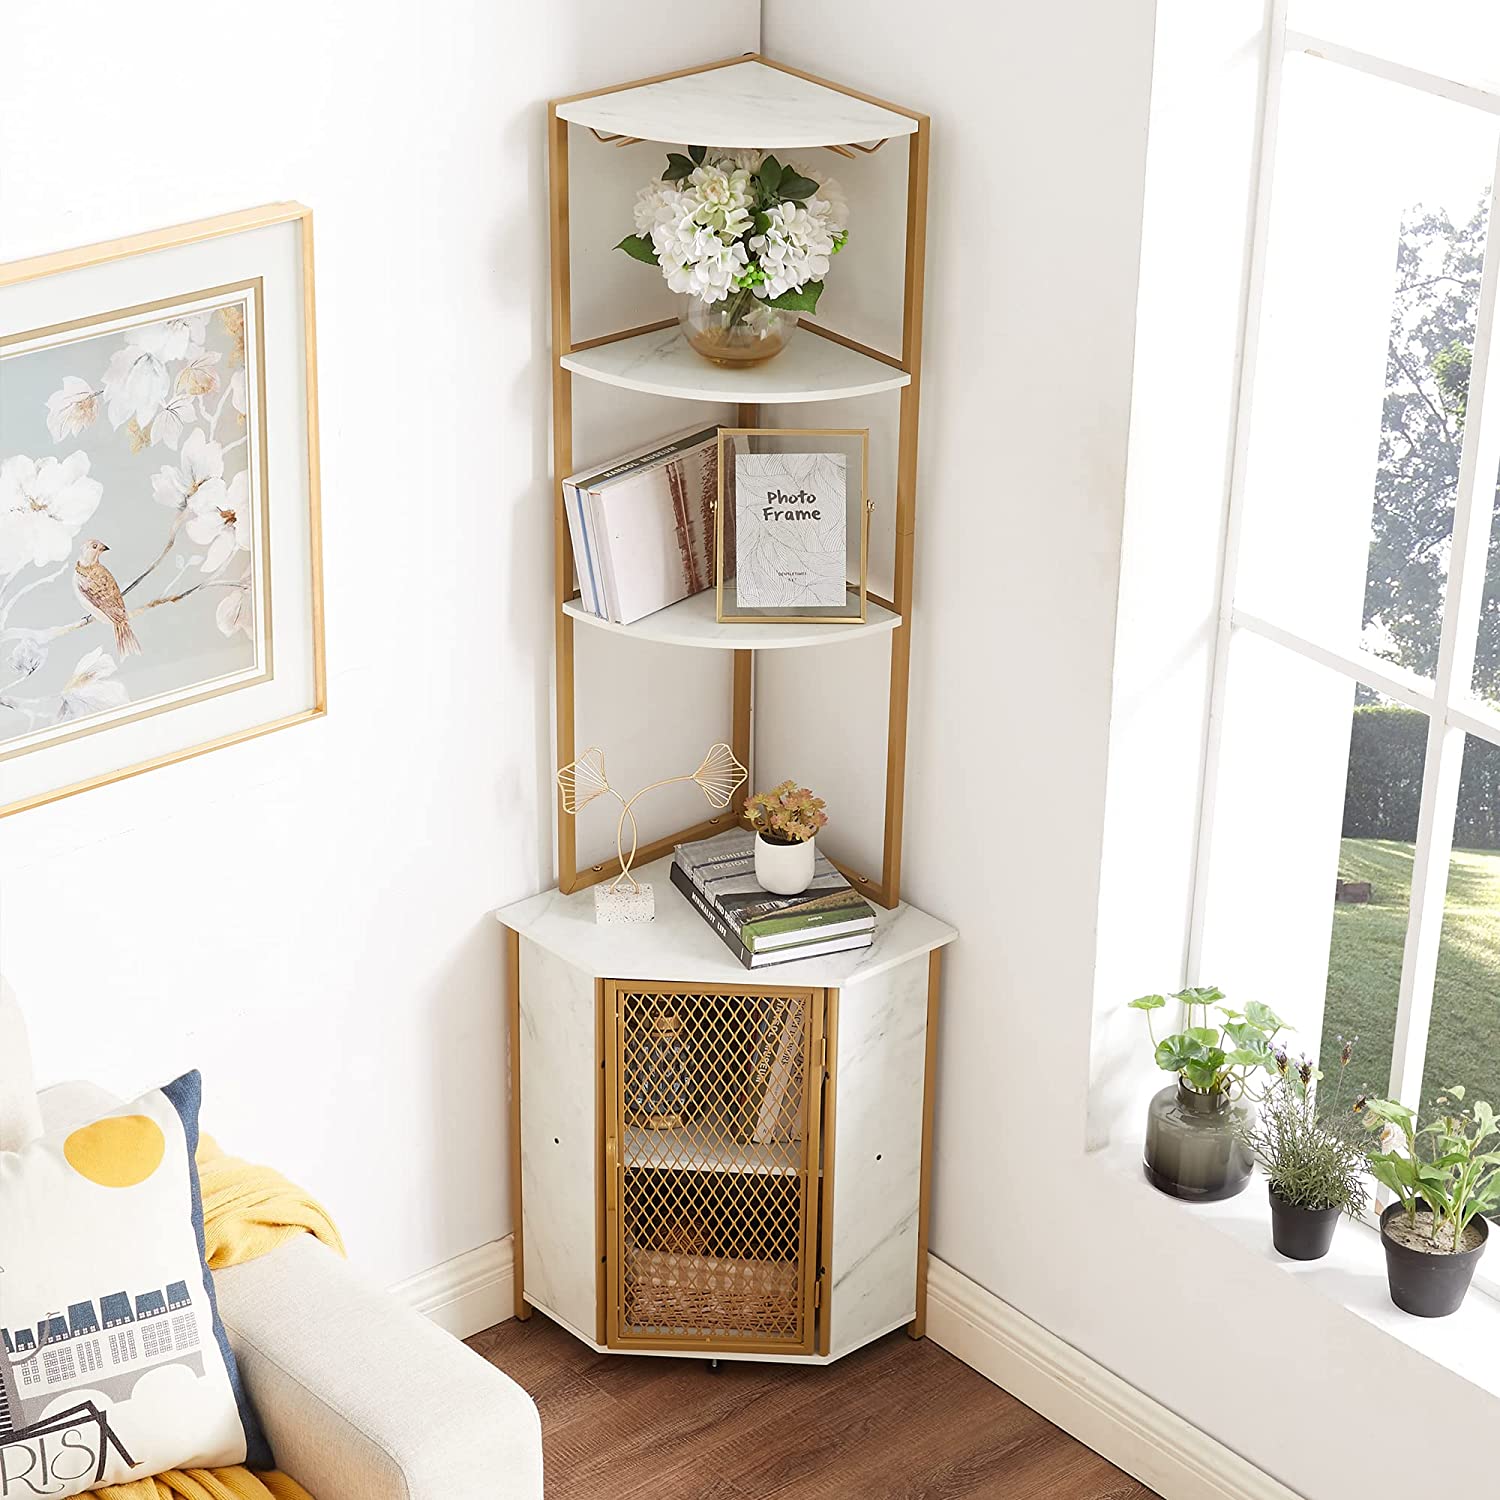 VECELO 5 Tier Corner Storage Cabinet with Wooden Shelves Free-Standing